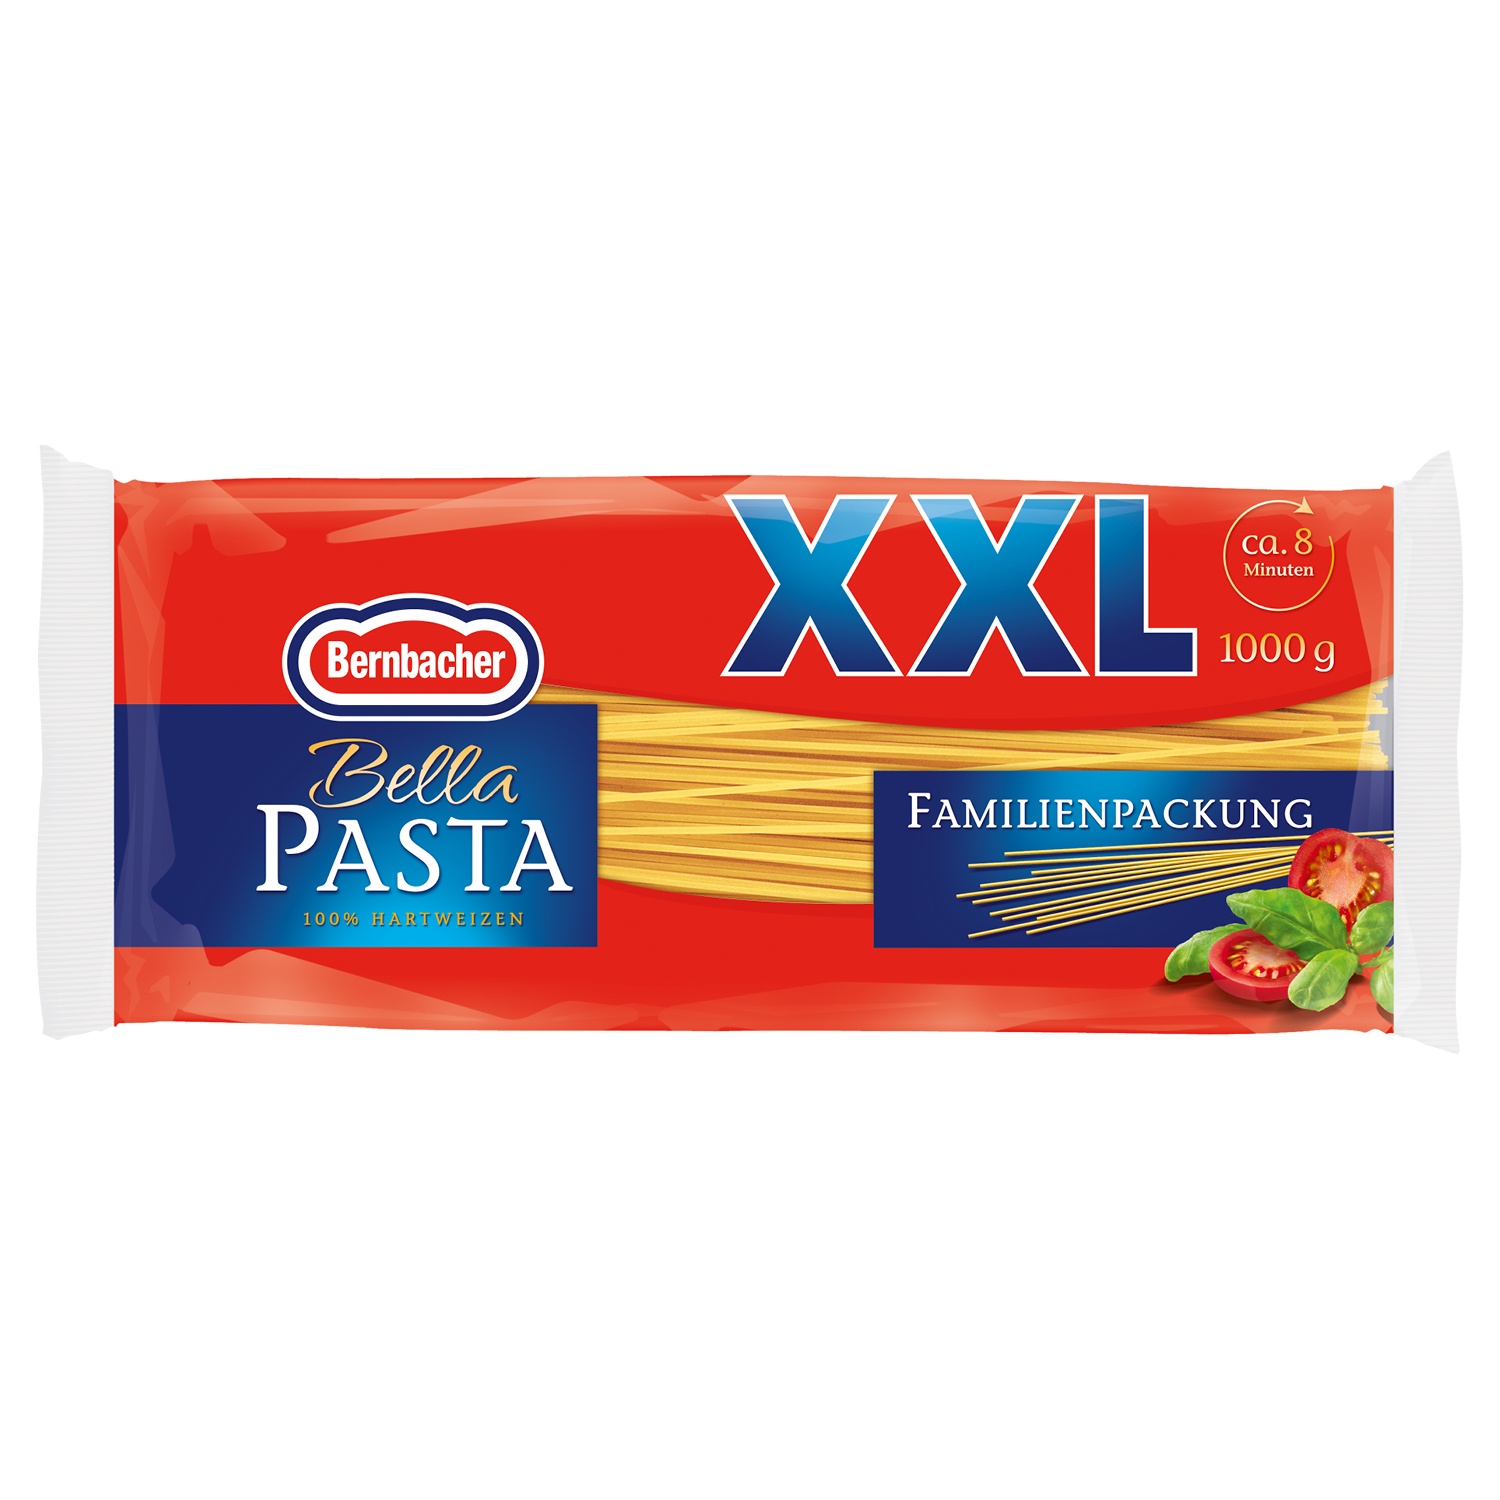 Bernbacher Spaghetti, XXL 1 kg